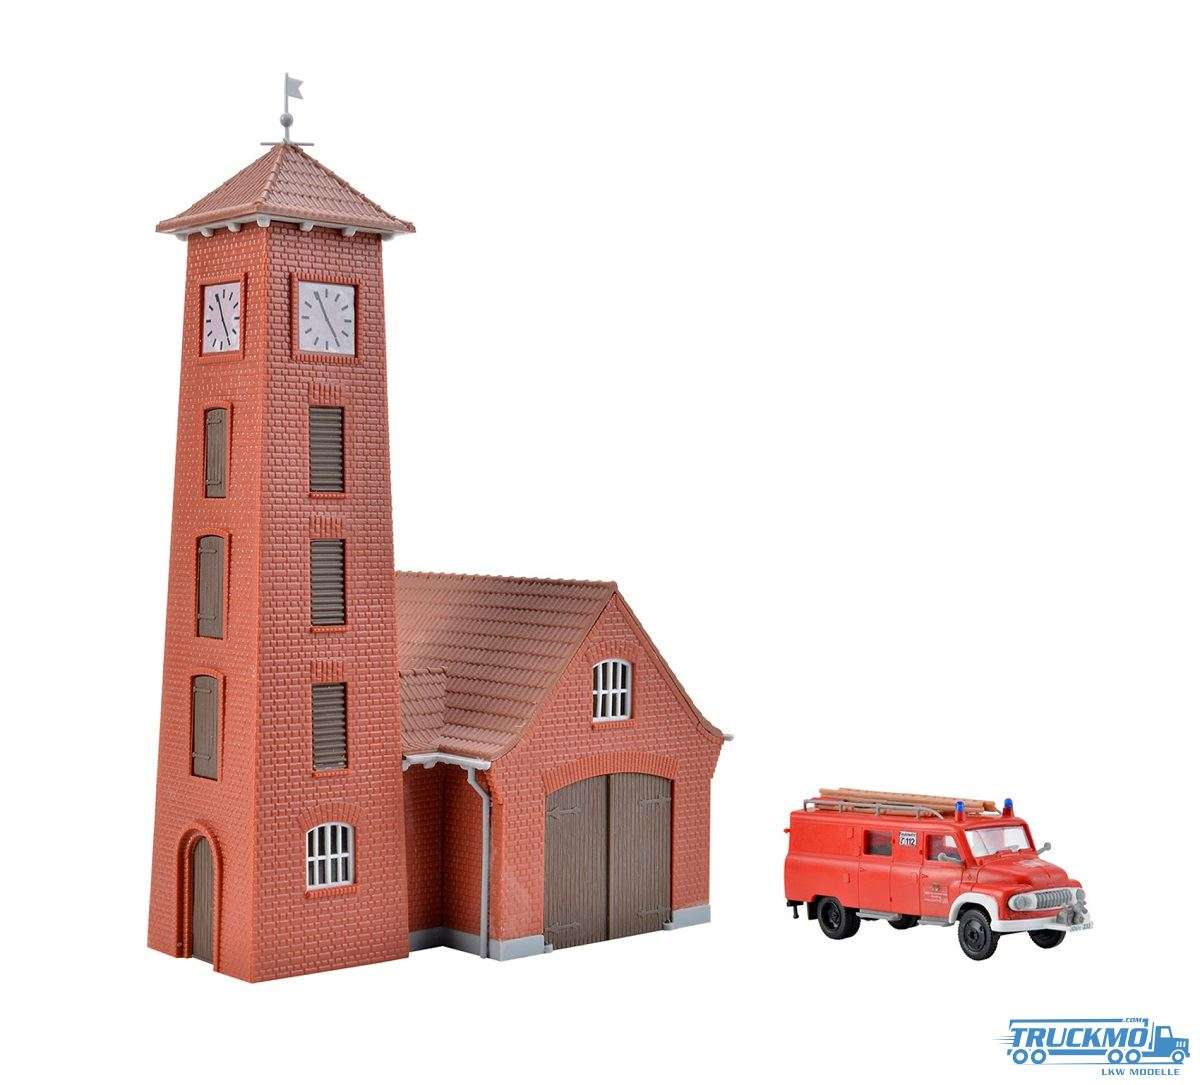 Kibri fire station Bahlburg-Lüneburg with vehicle Ford FK2500 39210